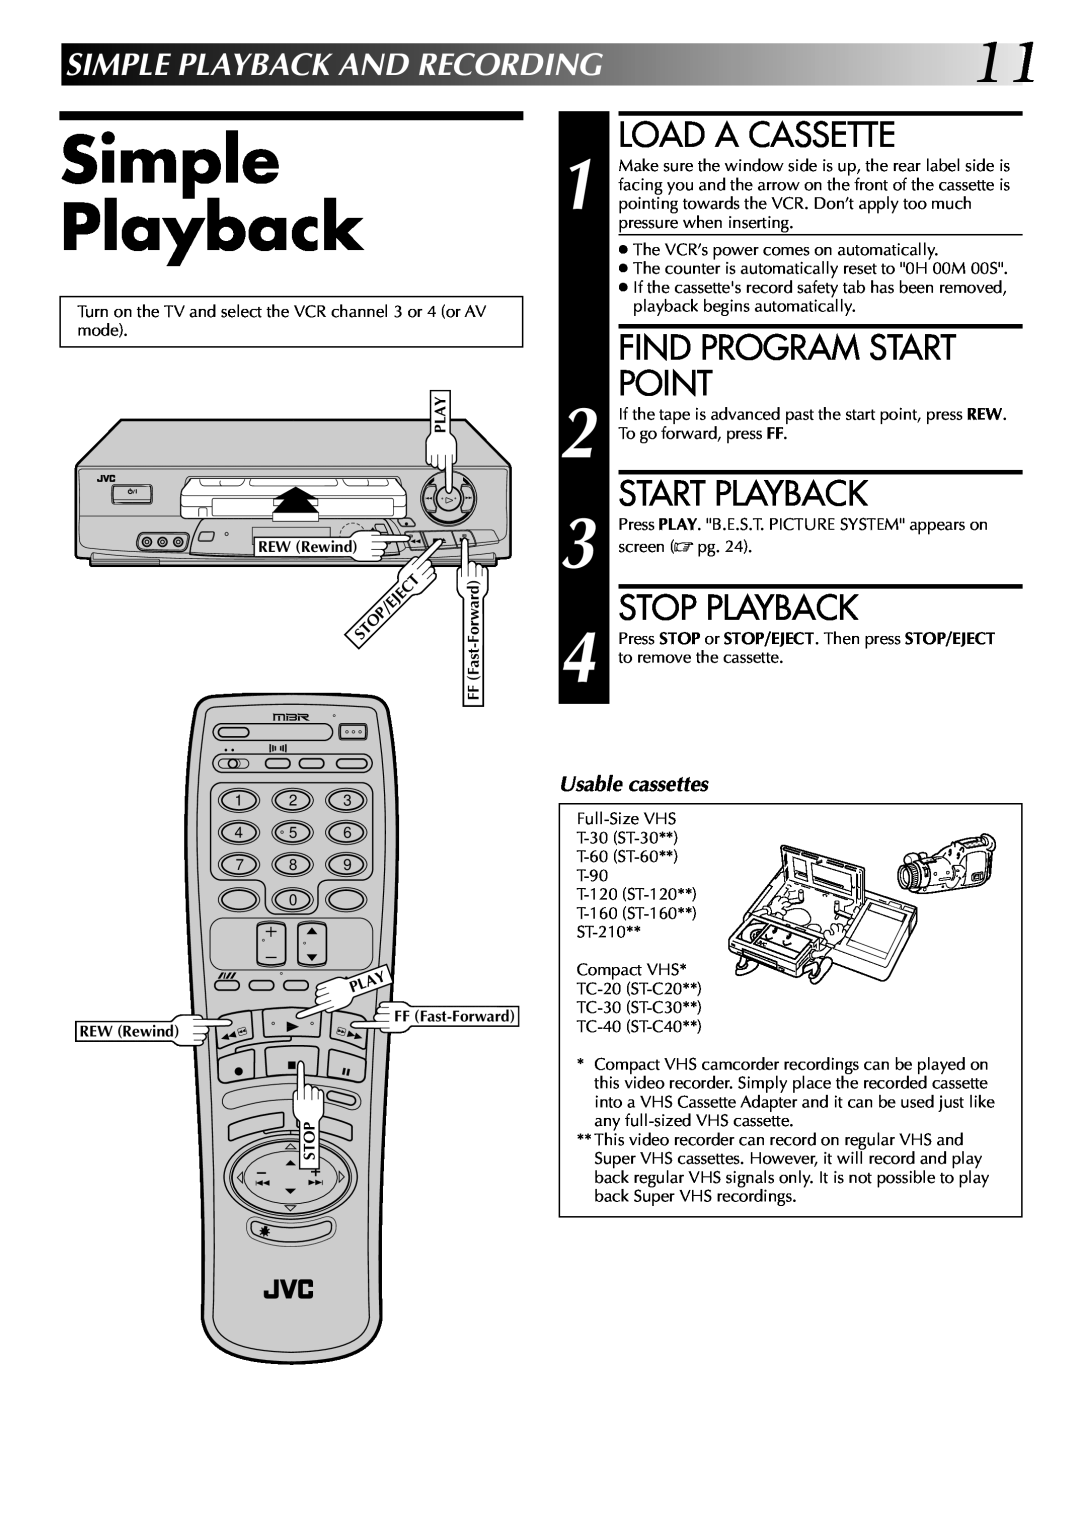 JVC HR-J7004UM Simple Playback, Load A Cassette, Find Program Start Point, Start Playback, Stop Playback, Usable cassettes 